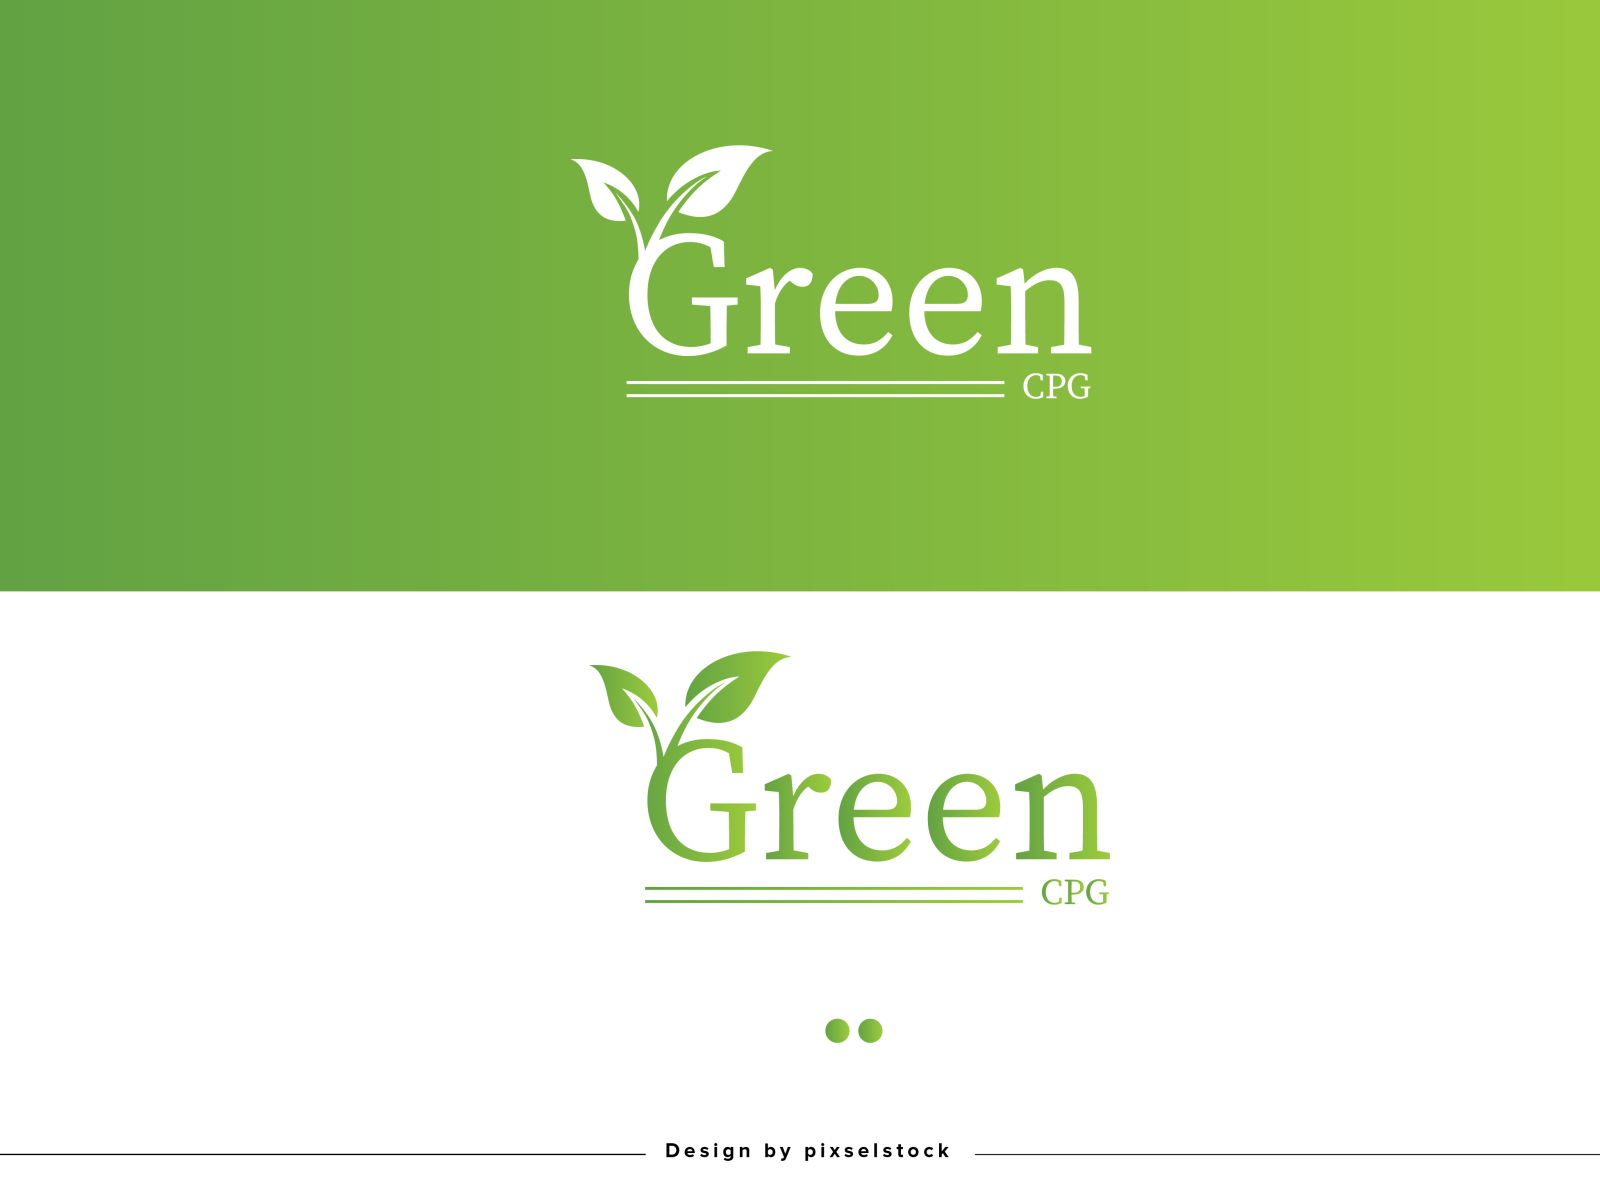 Green CPG logo by pixselstock on Dribbble